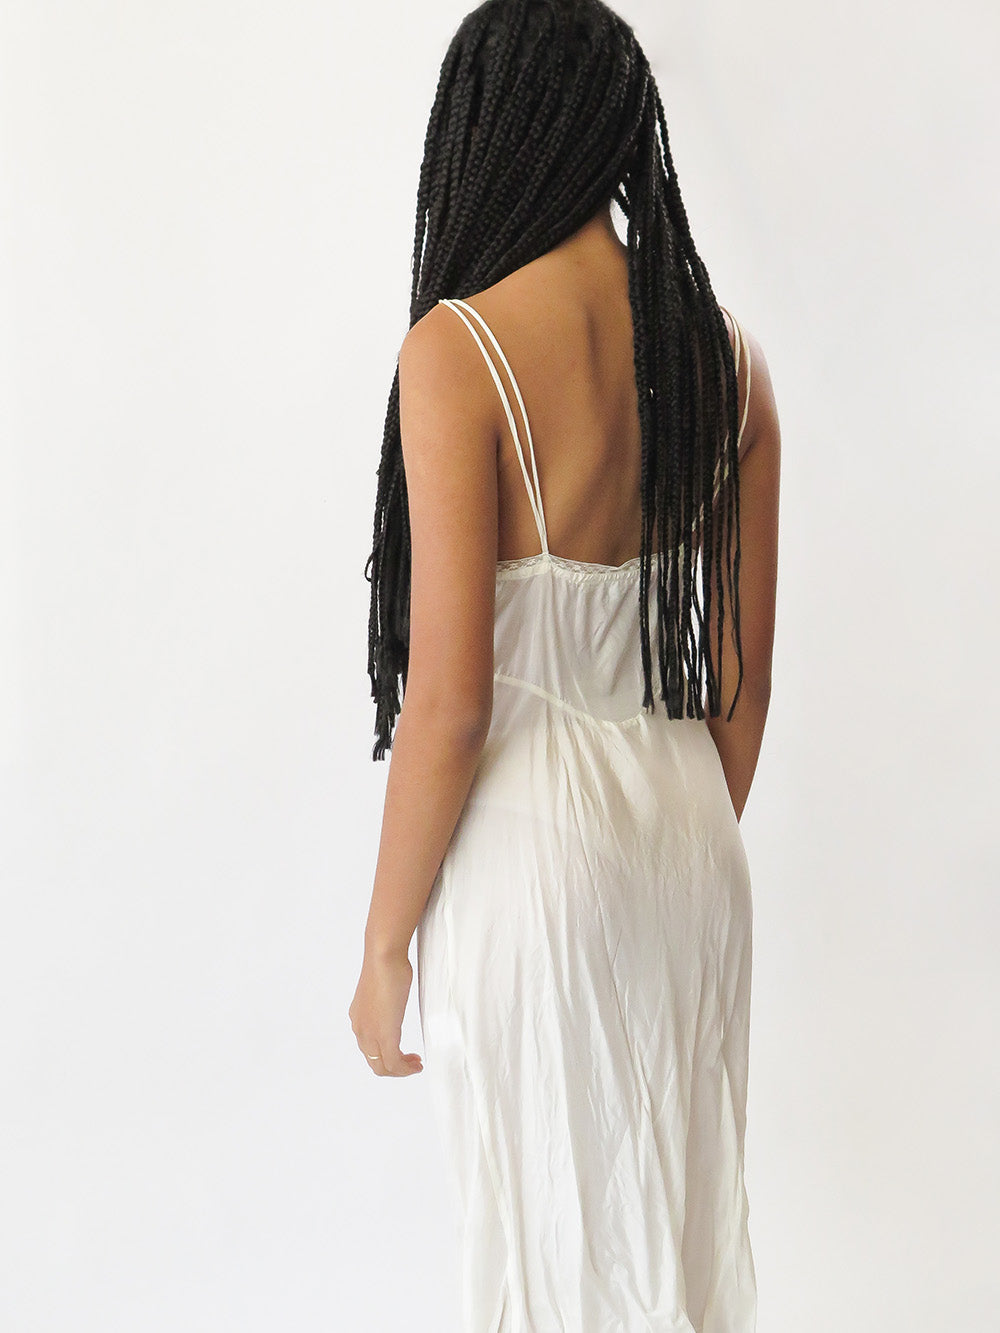 Erica Tanov  Maude Silk Slip Dress - Ivory